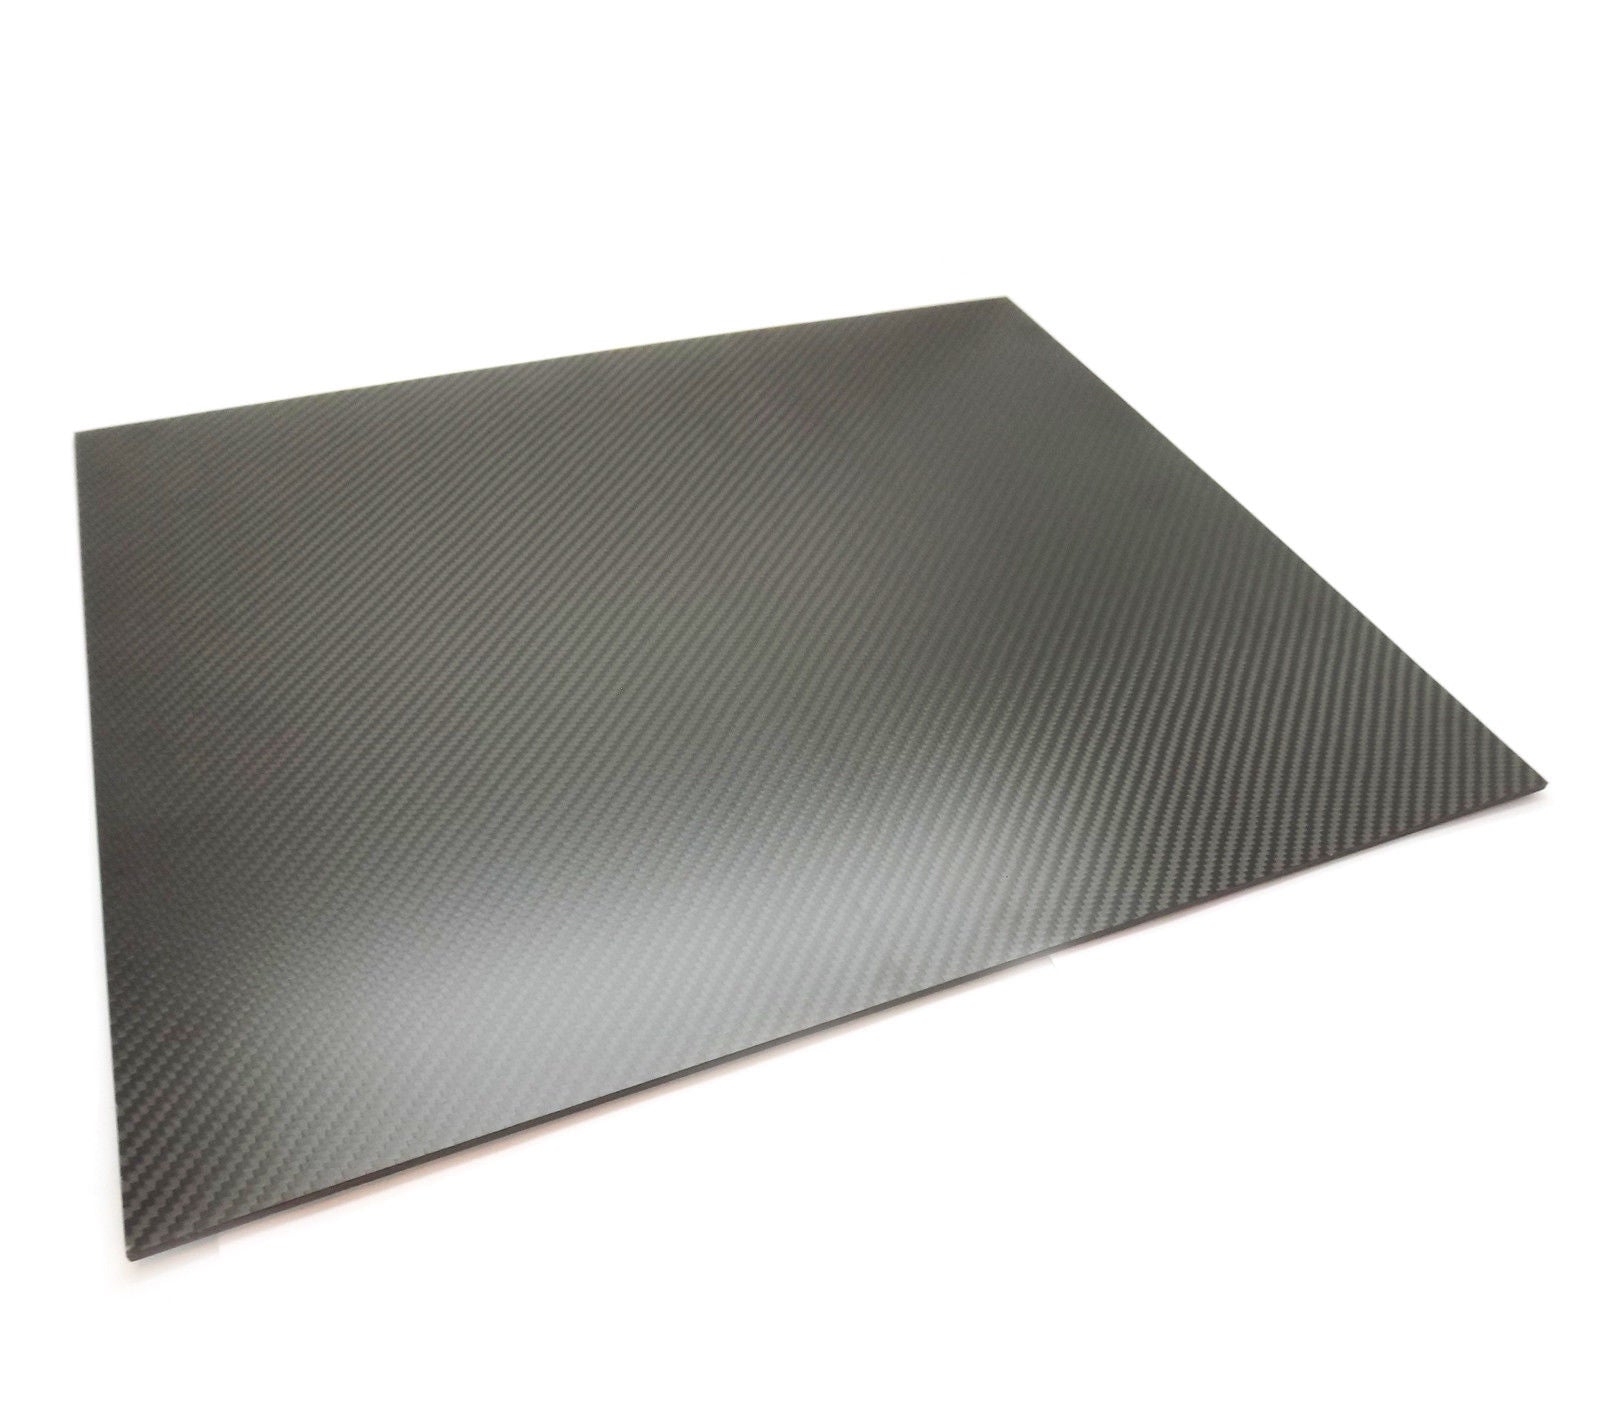 240g 2x2 Twill 3k Carbon Fibre Cloth 1.25m - Easy Composites